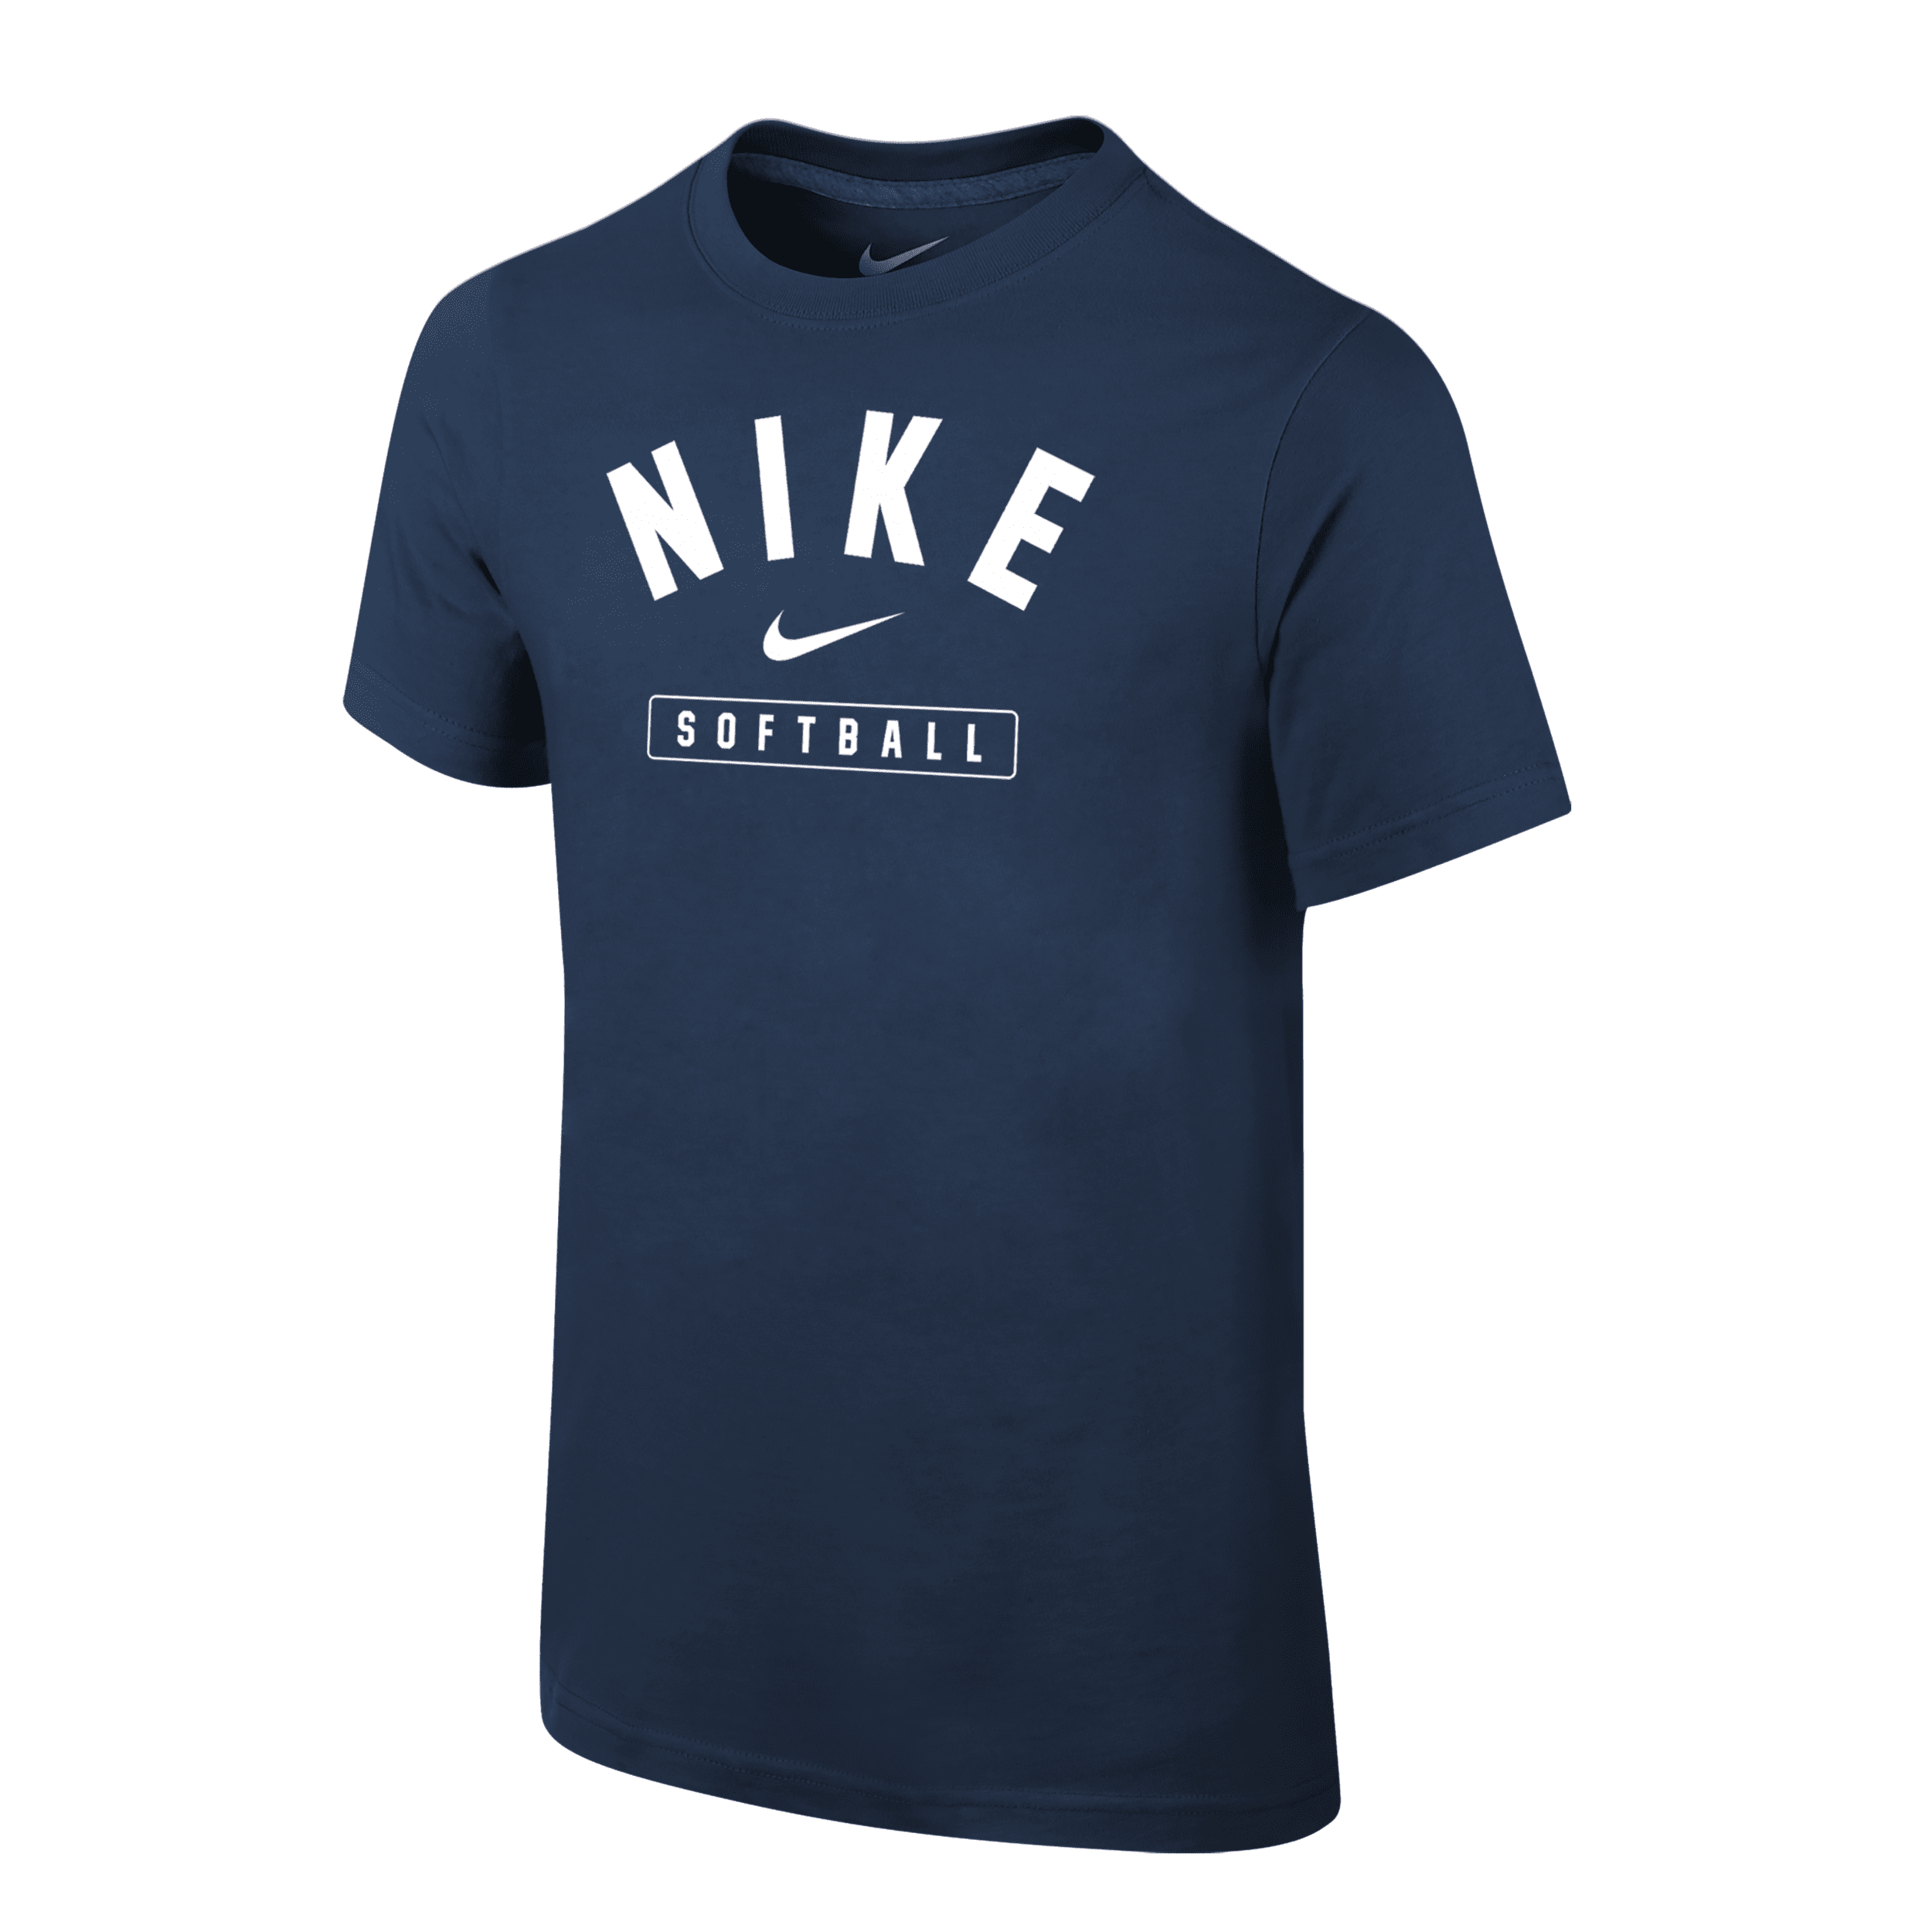 Nike Big Kids' Softball T-shirt In Blue